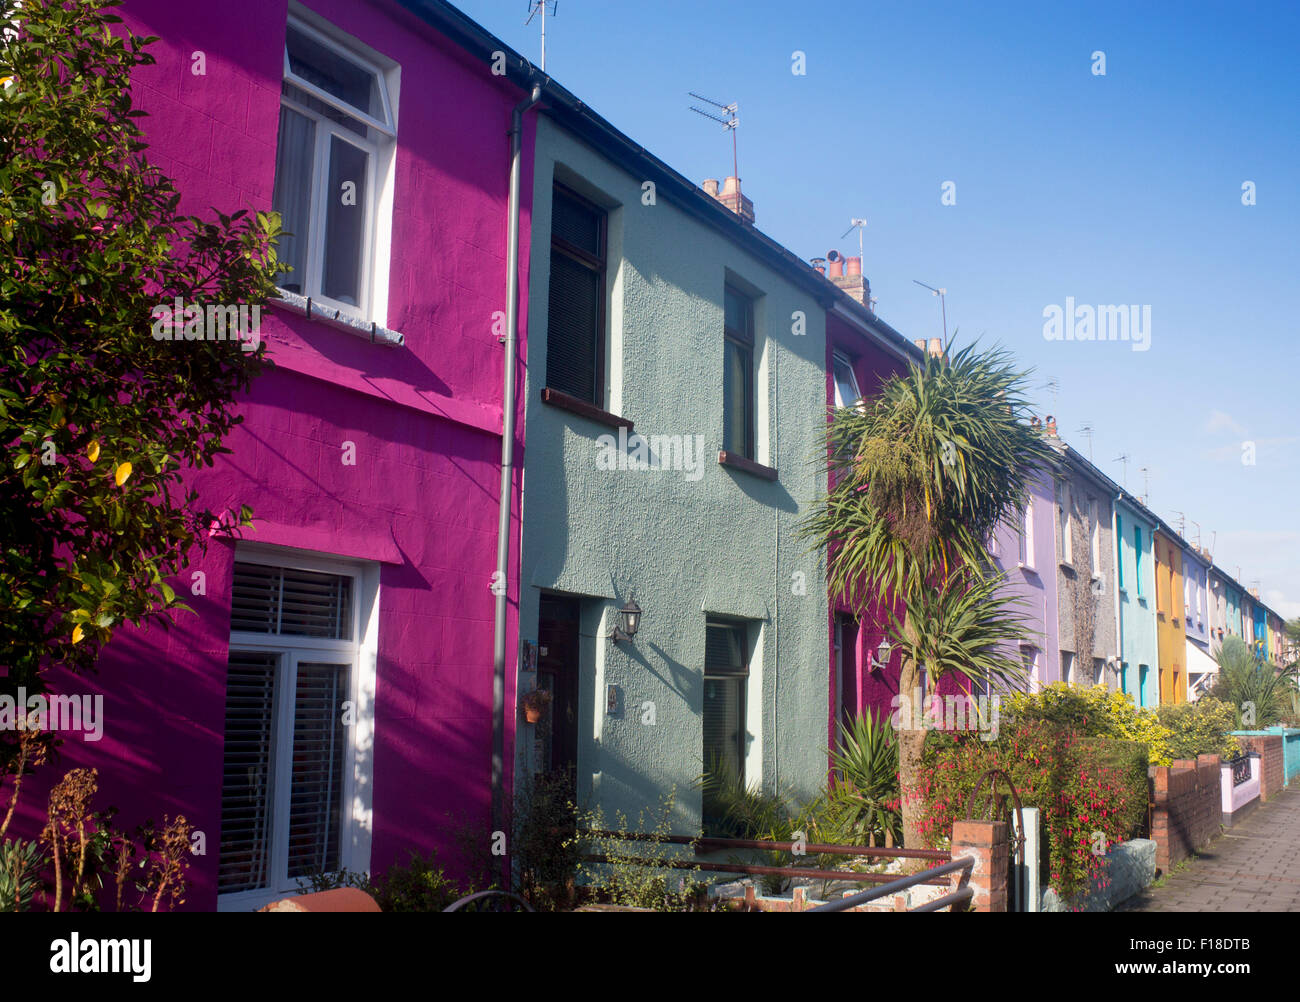 Bunt bemalte Terrasse Reihenhaus Häuser Ferienhäuser Roath Cardiff Wales UK Stockfoto